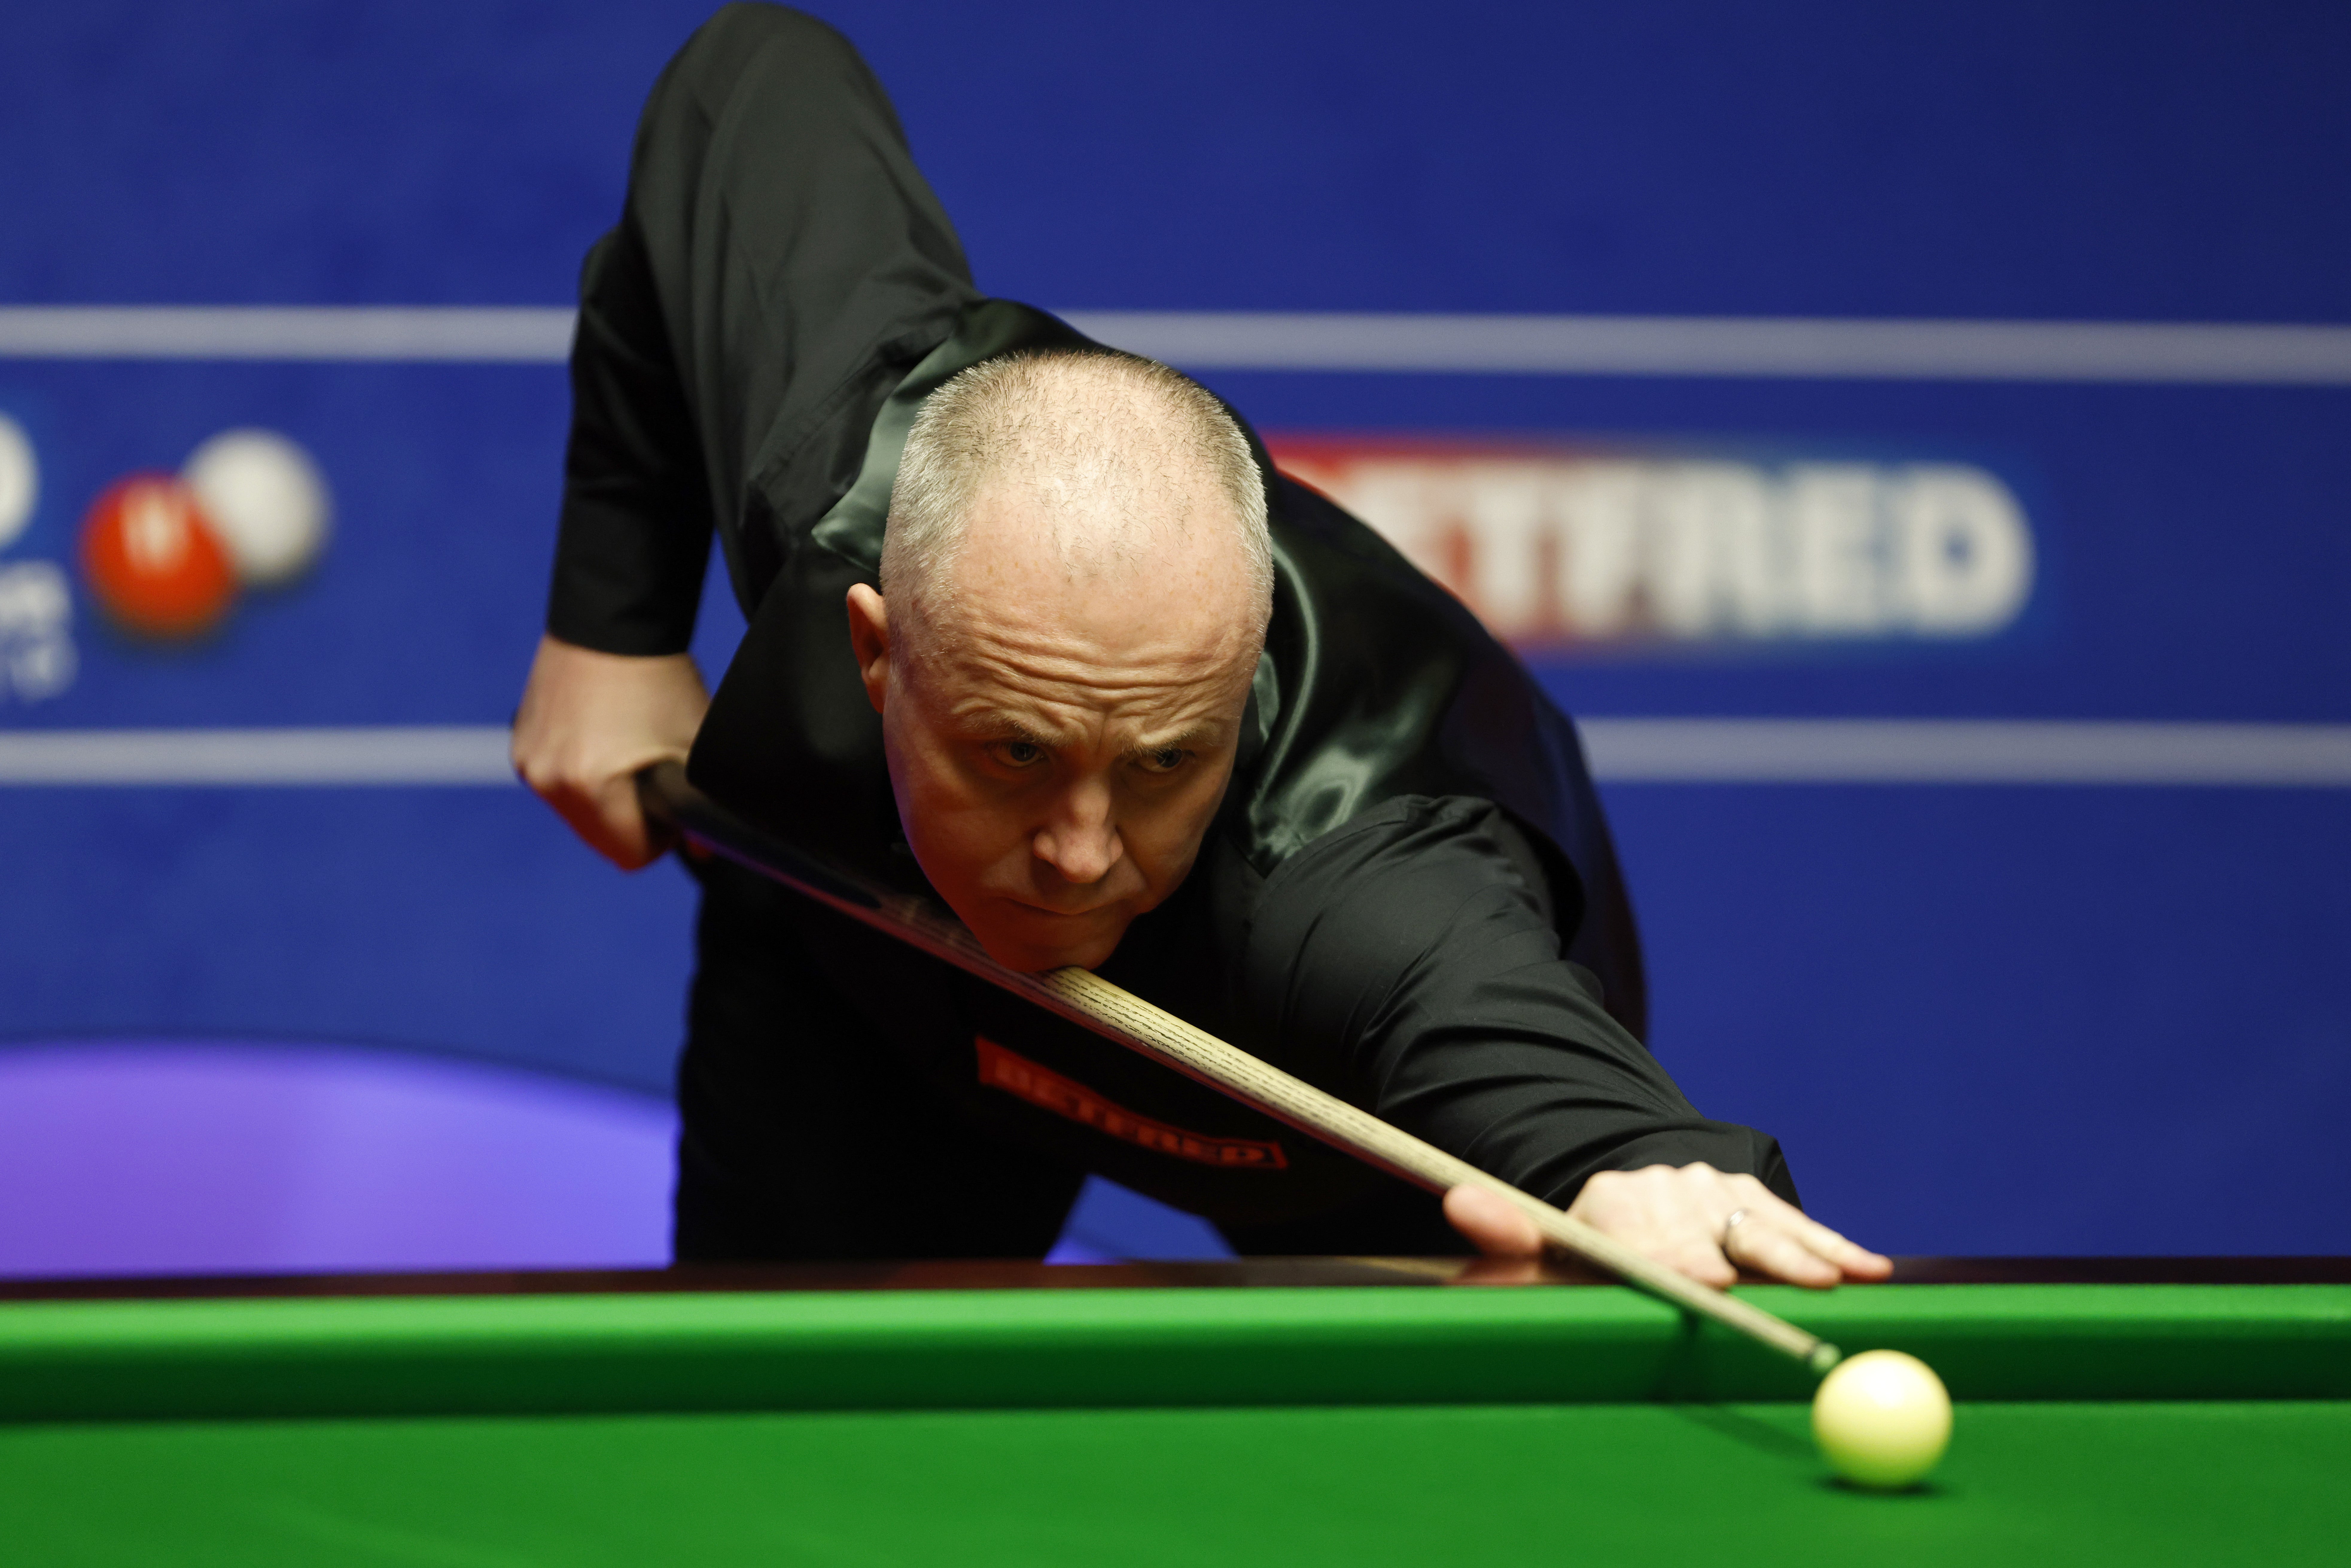 John Higgins took an early 3-0 lead against Ronnie O’Sullivan in their World Championship semi-final (Richard Sellers/PA)